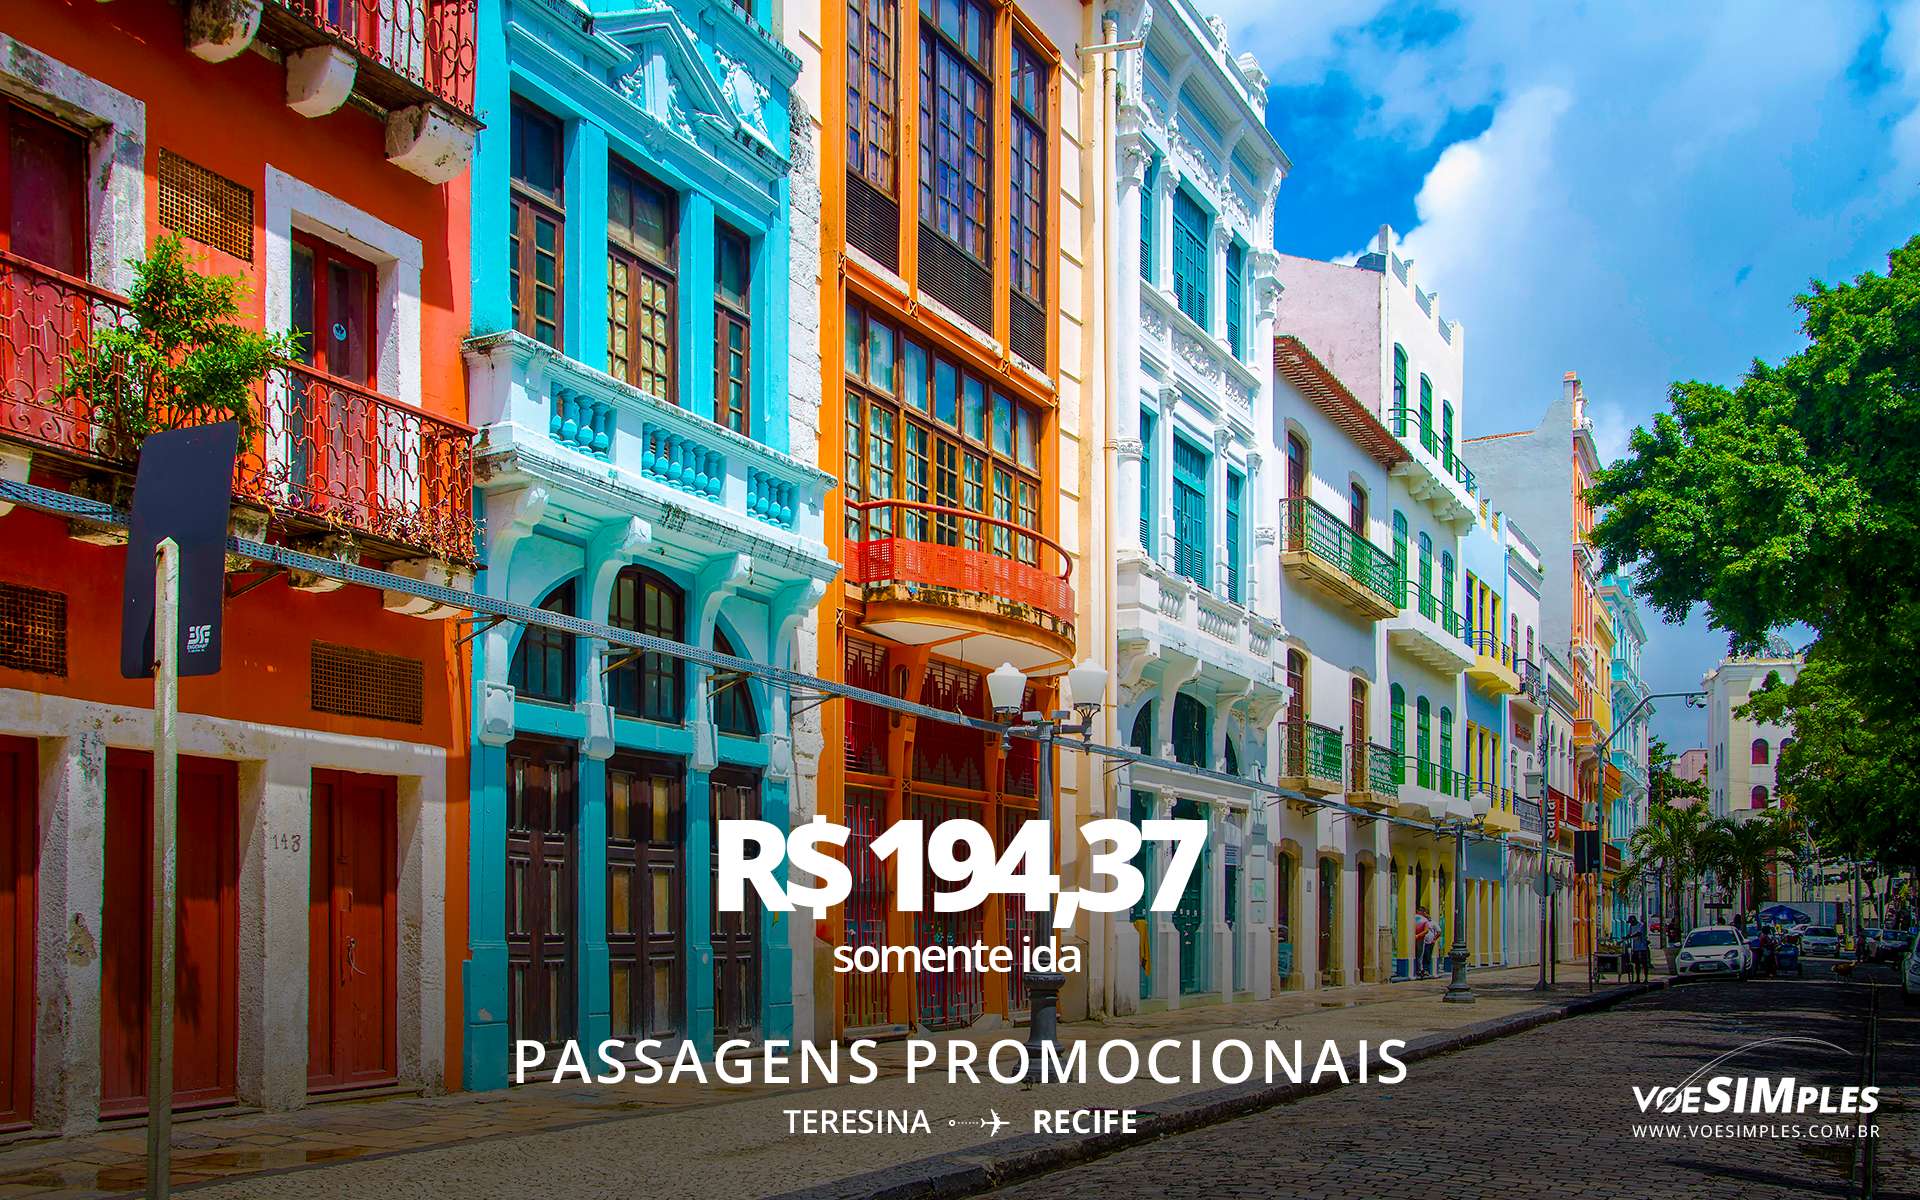 passagem-aerea-promocional-azul-teresina-recife-brasil-america-sul-voe-simples-promo-sdfull